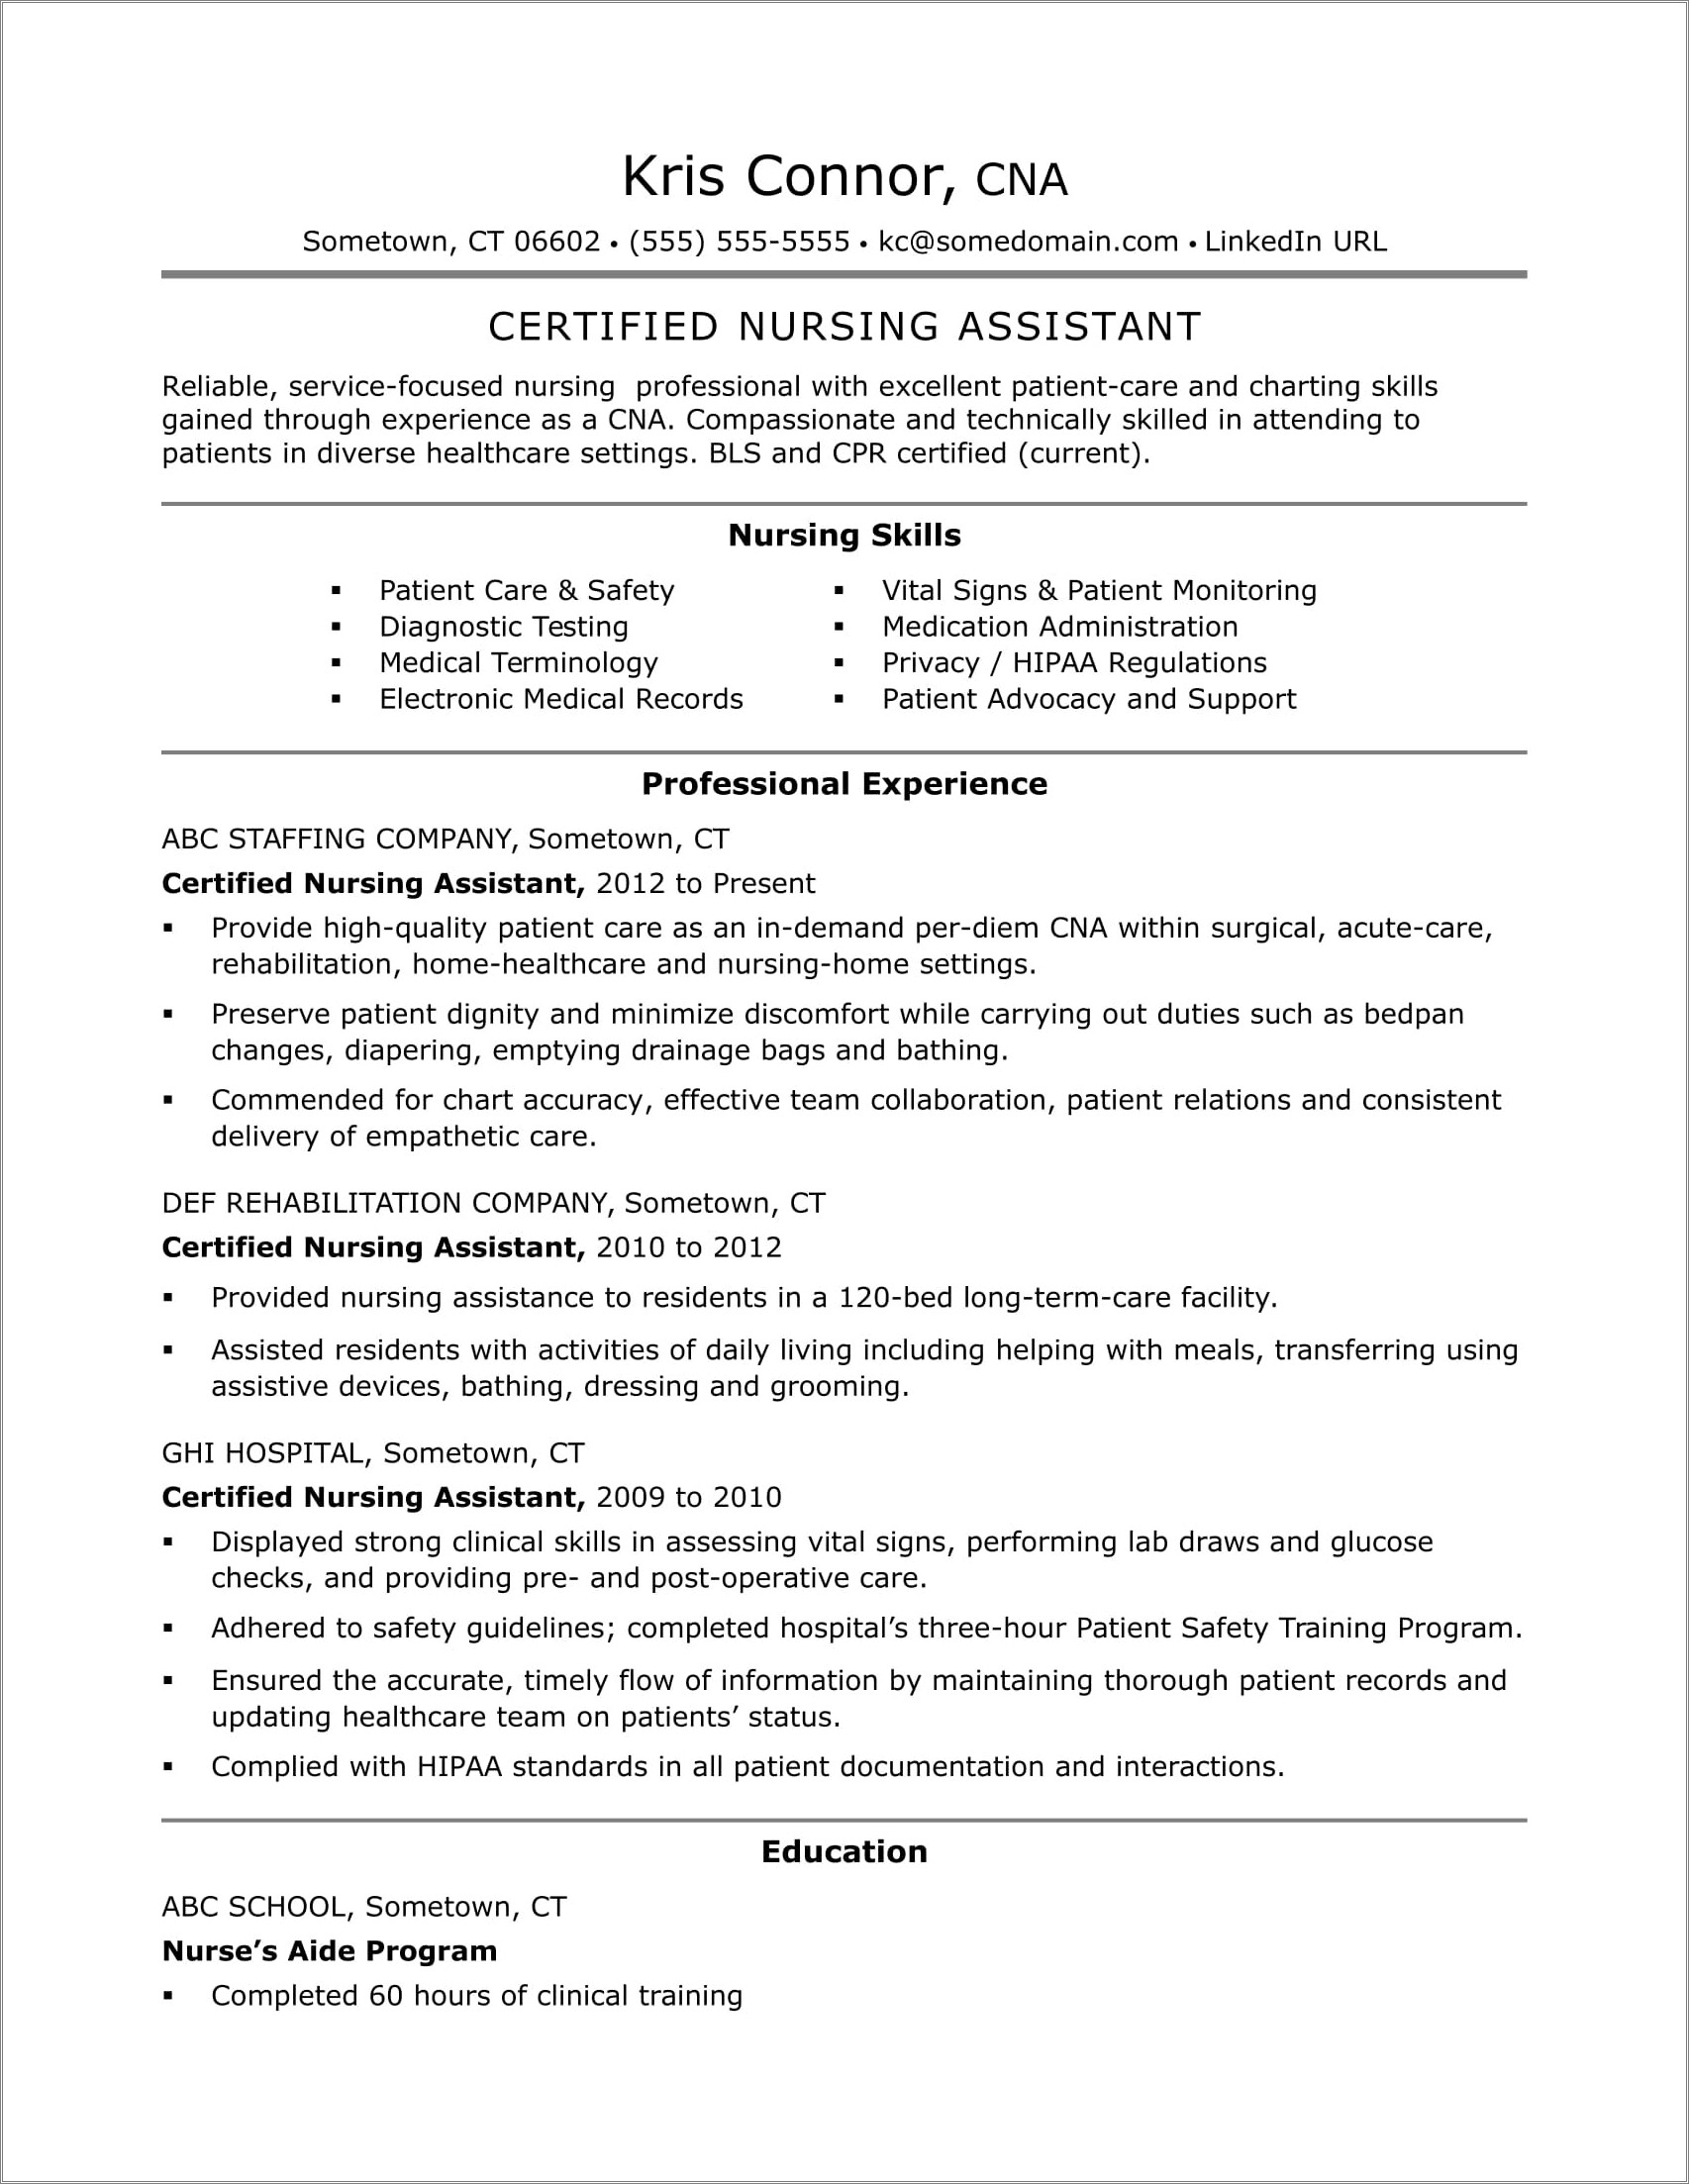 Resume Points For Nurse In Skilled Nursing Facility